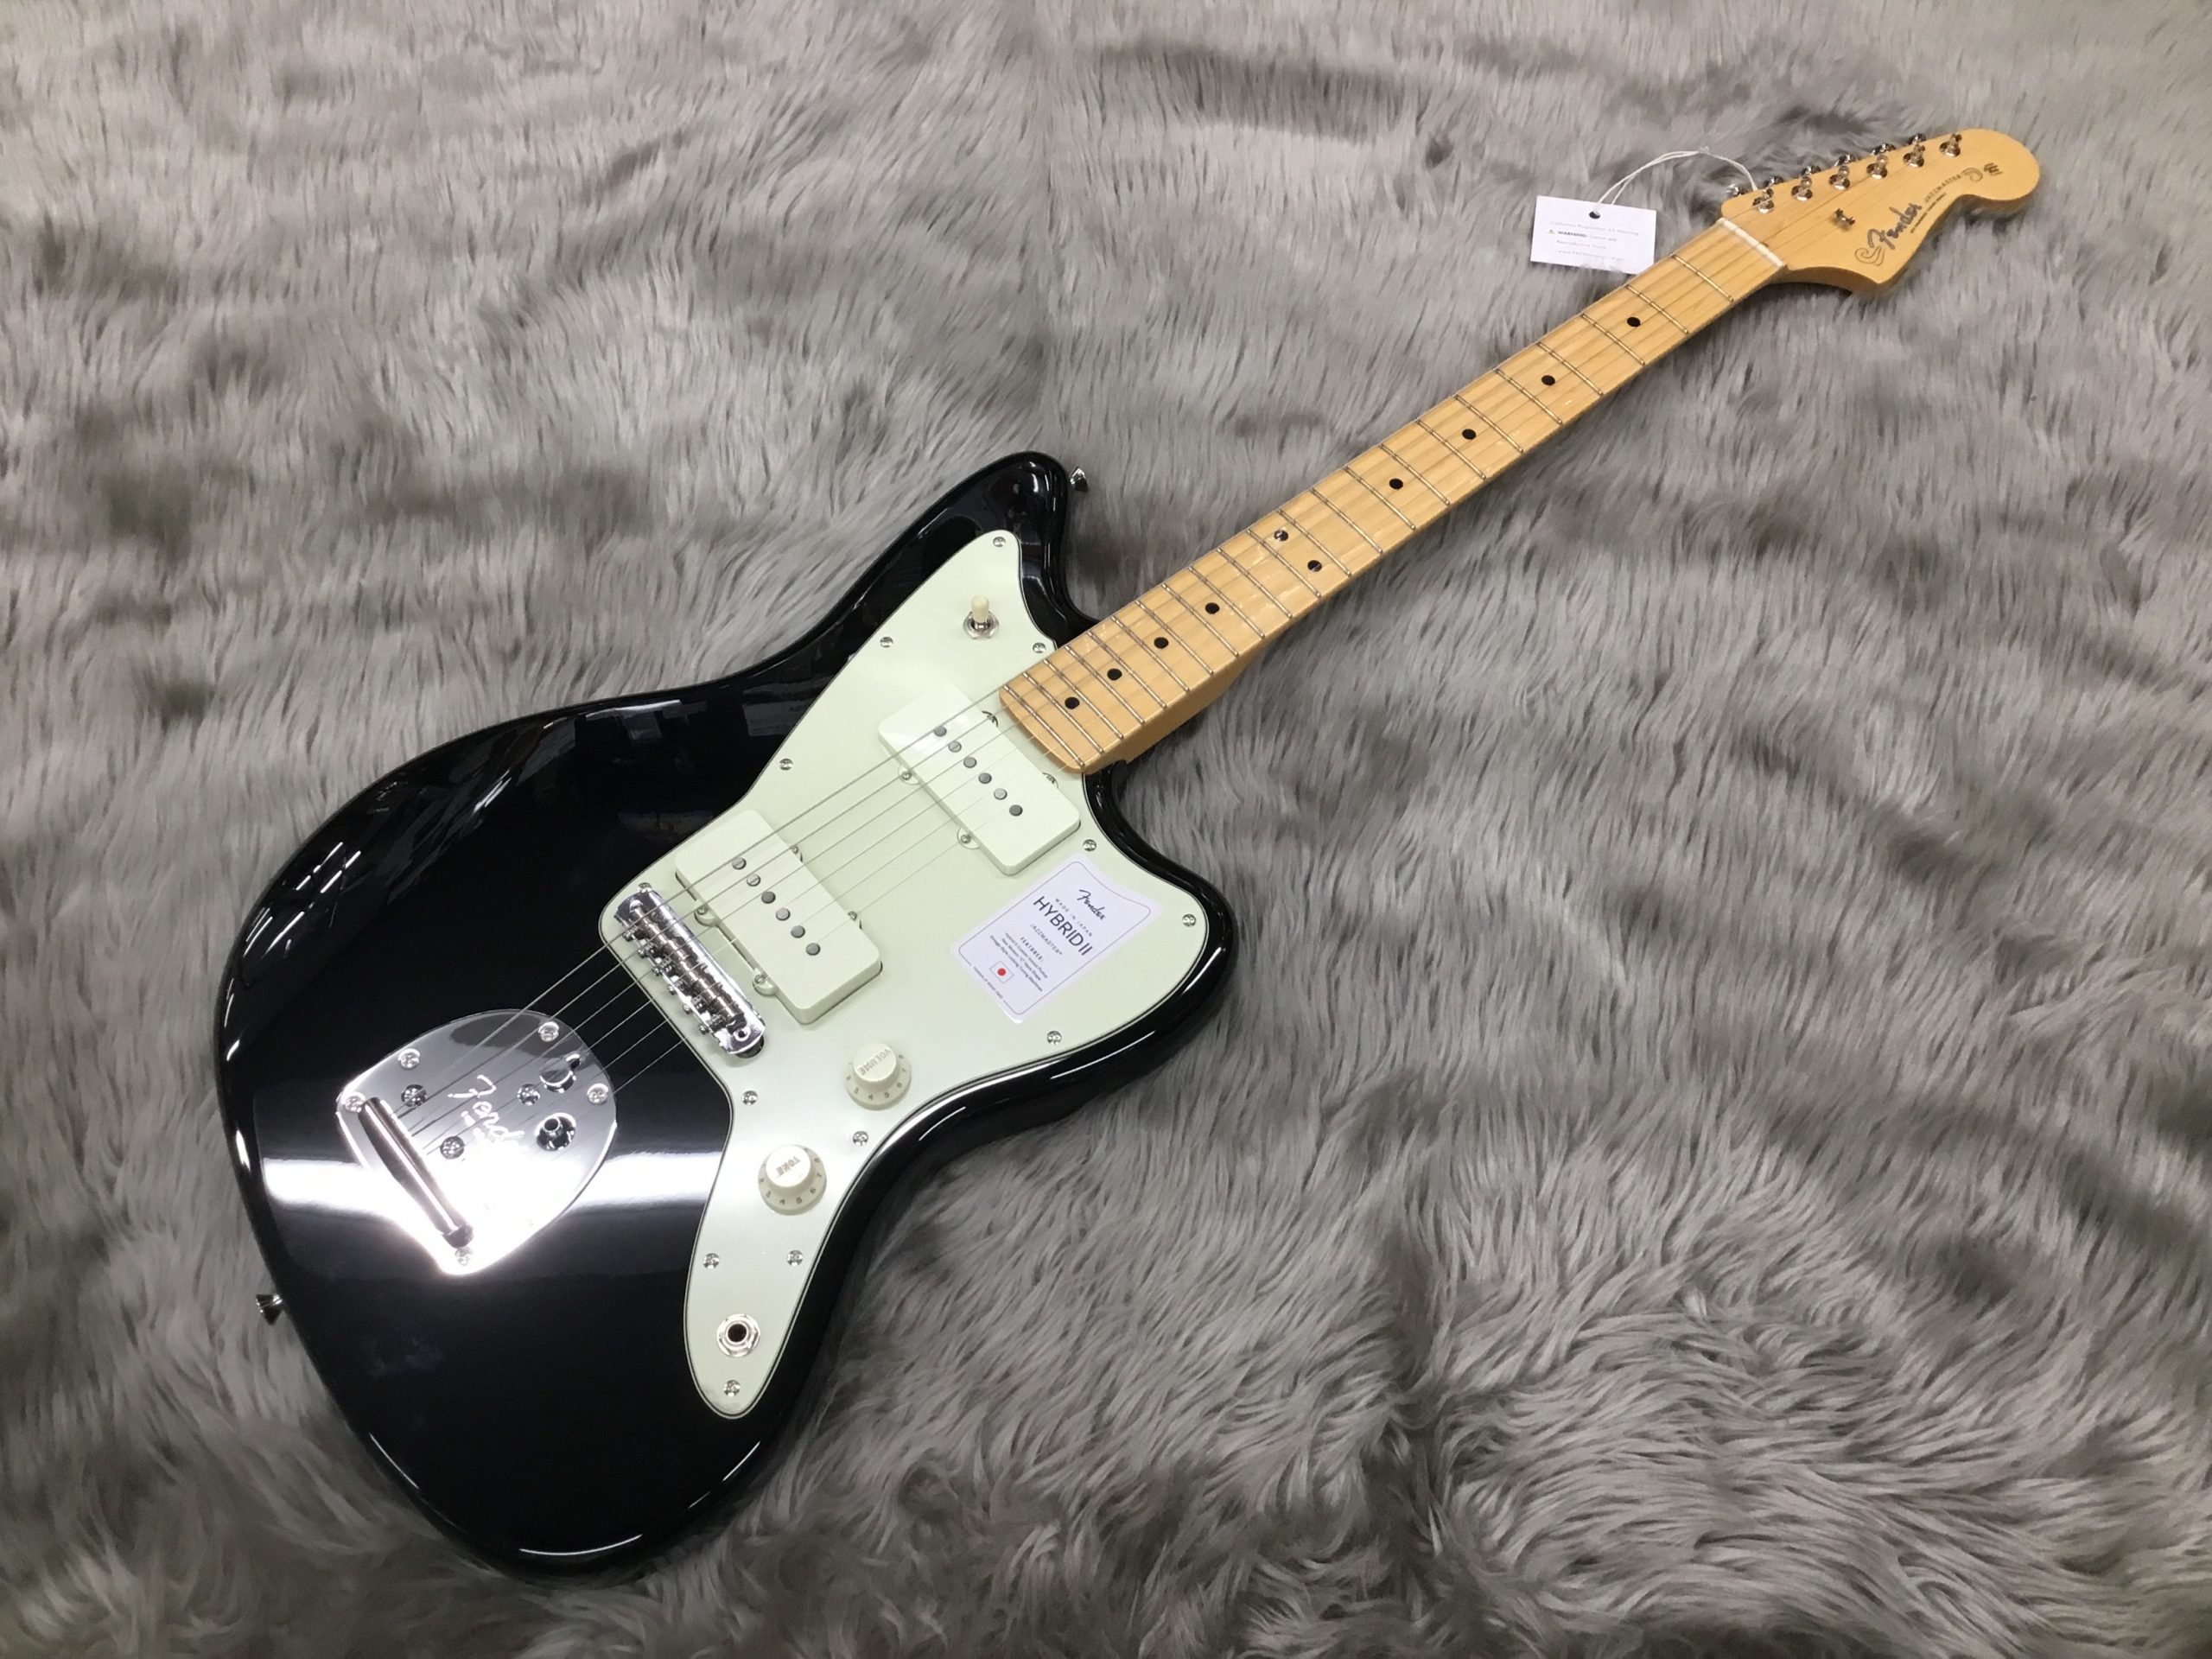 *Fender　MADE IN JAPAN HYBRID II JAZZMASTER®（Black） |*メーカー|*型名|*販売価格（税込）| |Fender|MADE IN JAPAN HYBRID II JAZZMASTER®]]|[!123,750!] ]]| [!!特徴!!] ]]定評ある […]